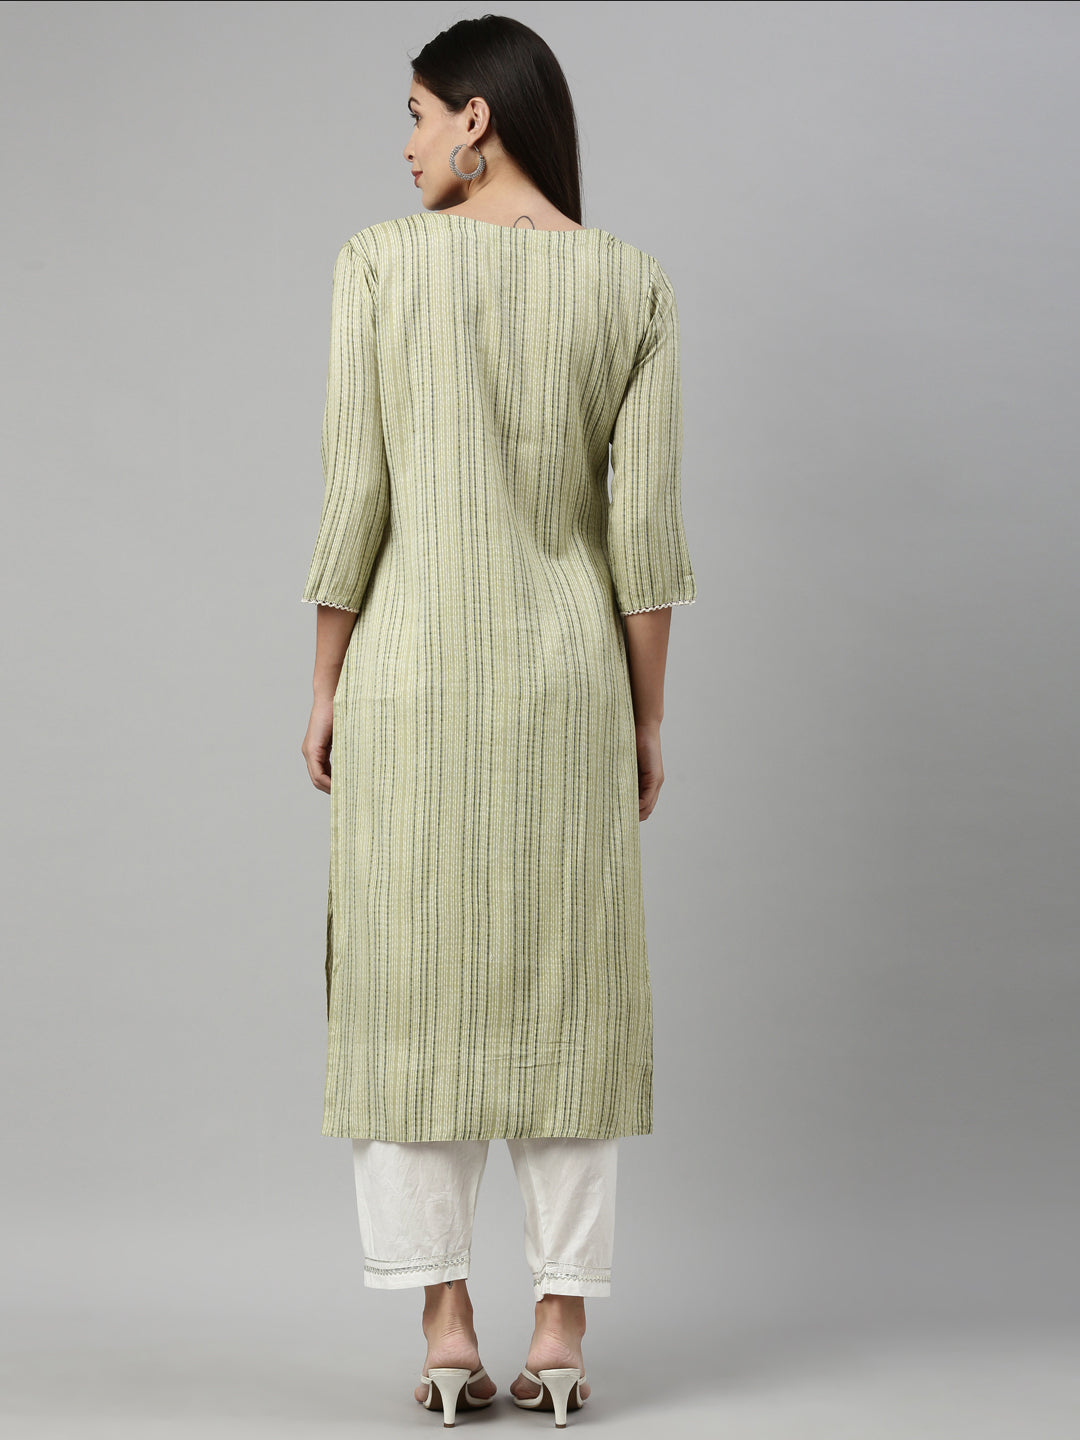 Neeru'S GREEN Color SLUB RAYON Fabric Kurta